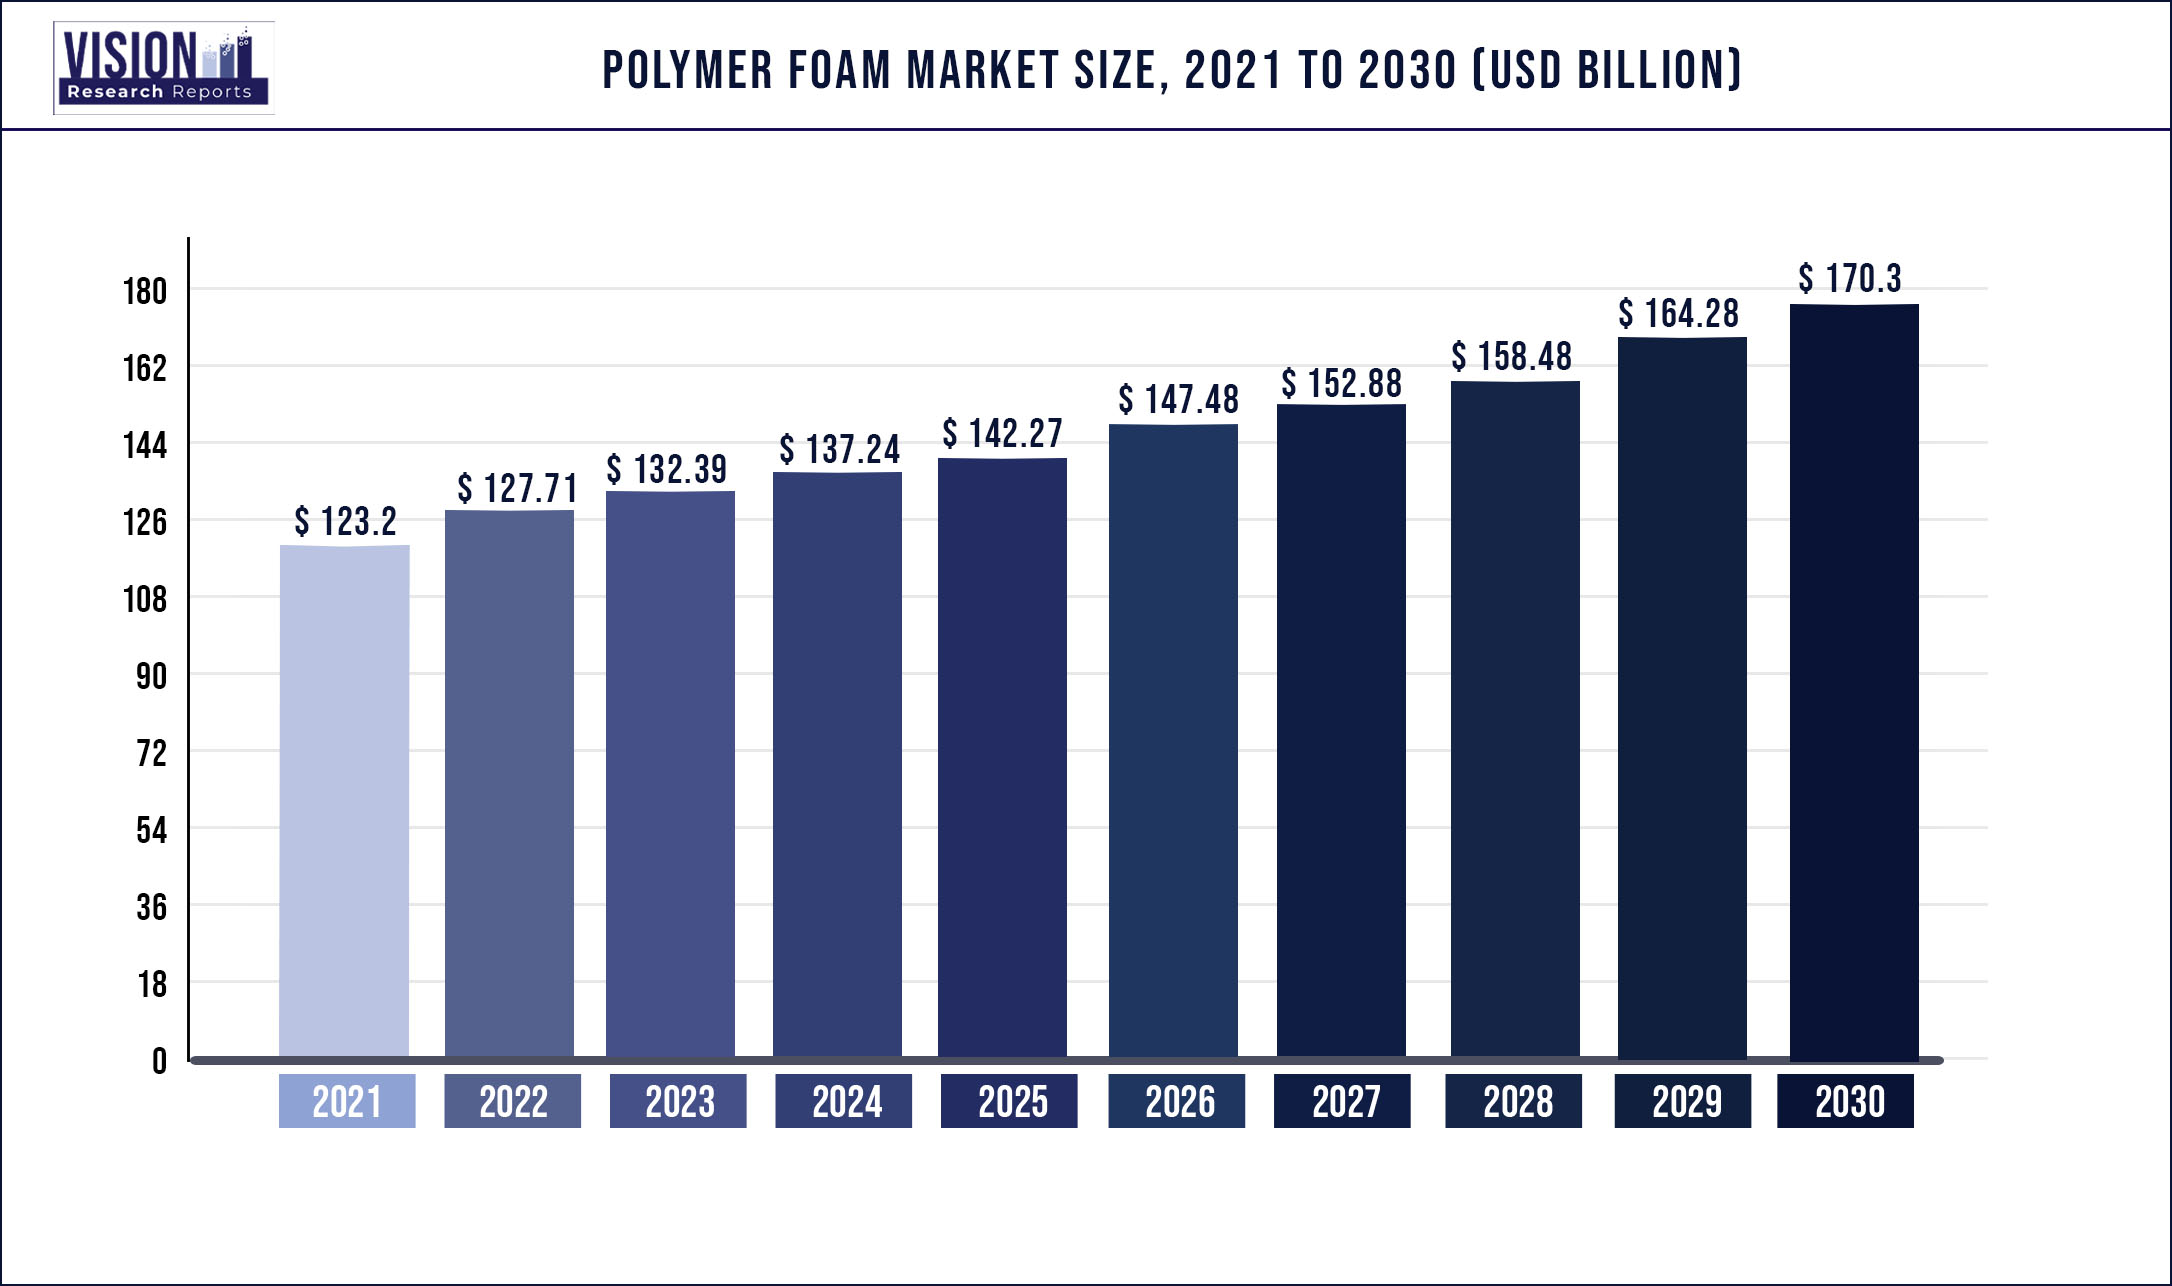 Polymer Foam Market Size 2021 to 2030